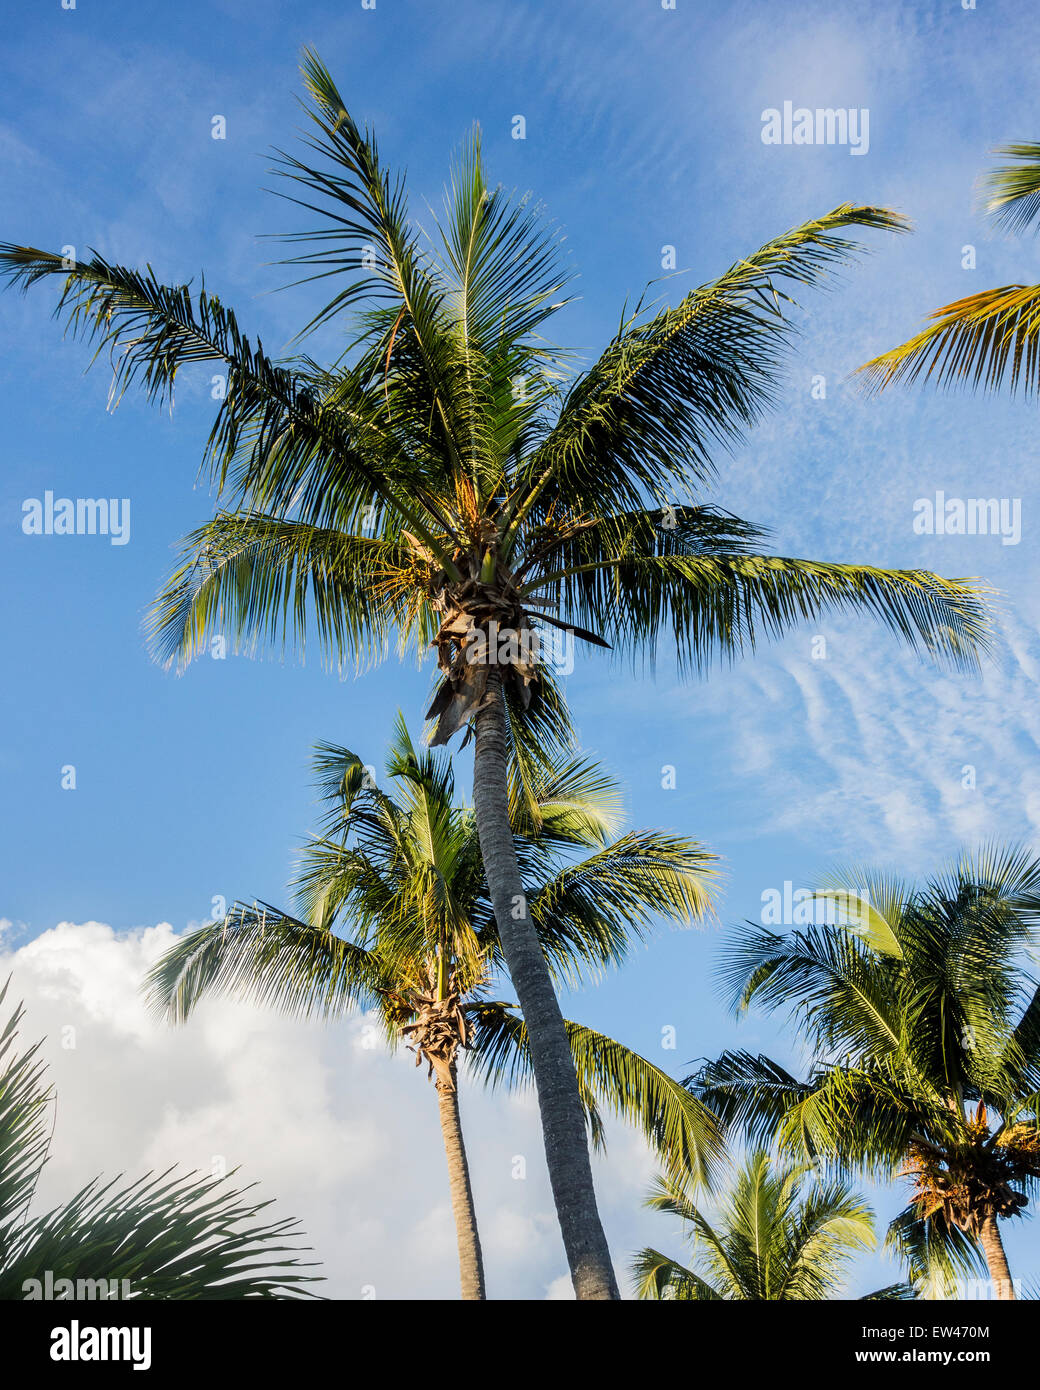 Coconut palm trees, Cocos nucifera, against a blue sky on St. Croix, U.S. Virgin Islands. Stock Photo